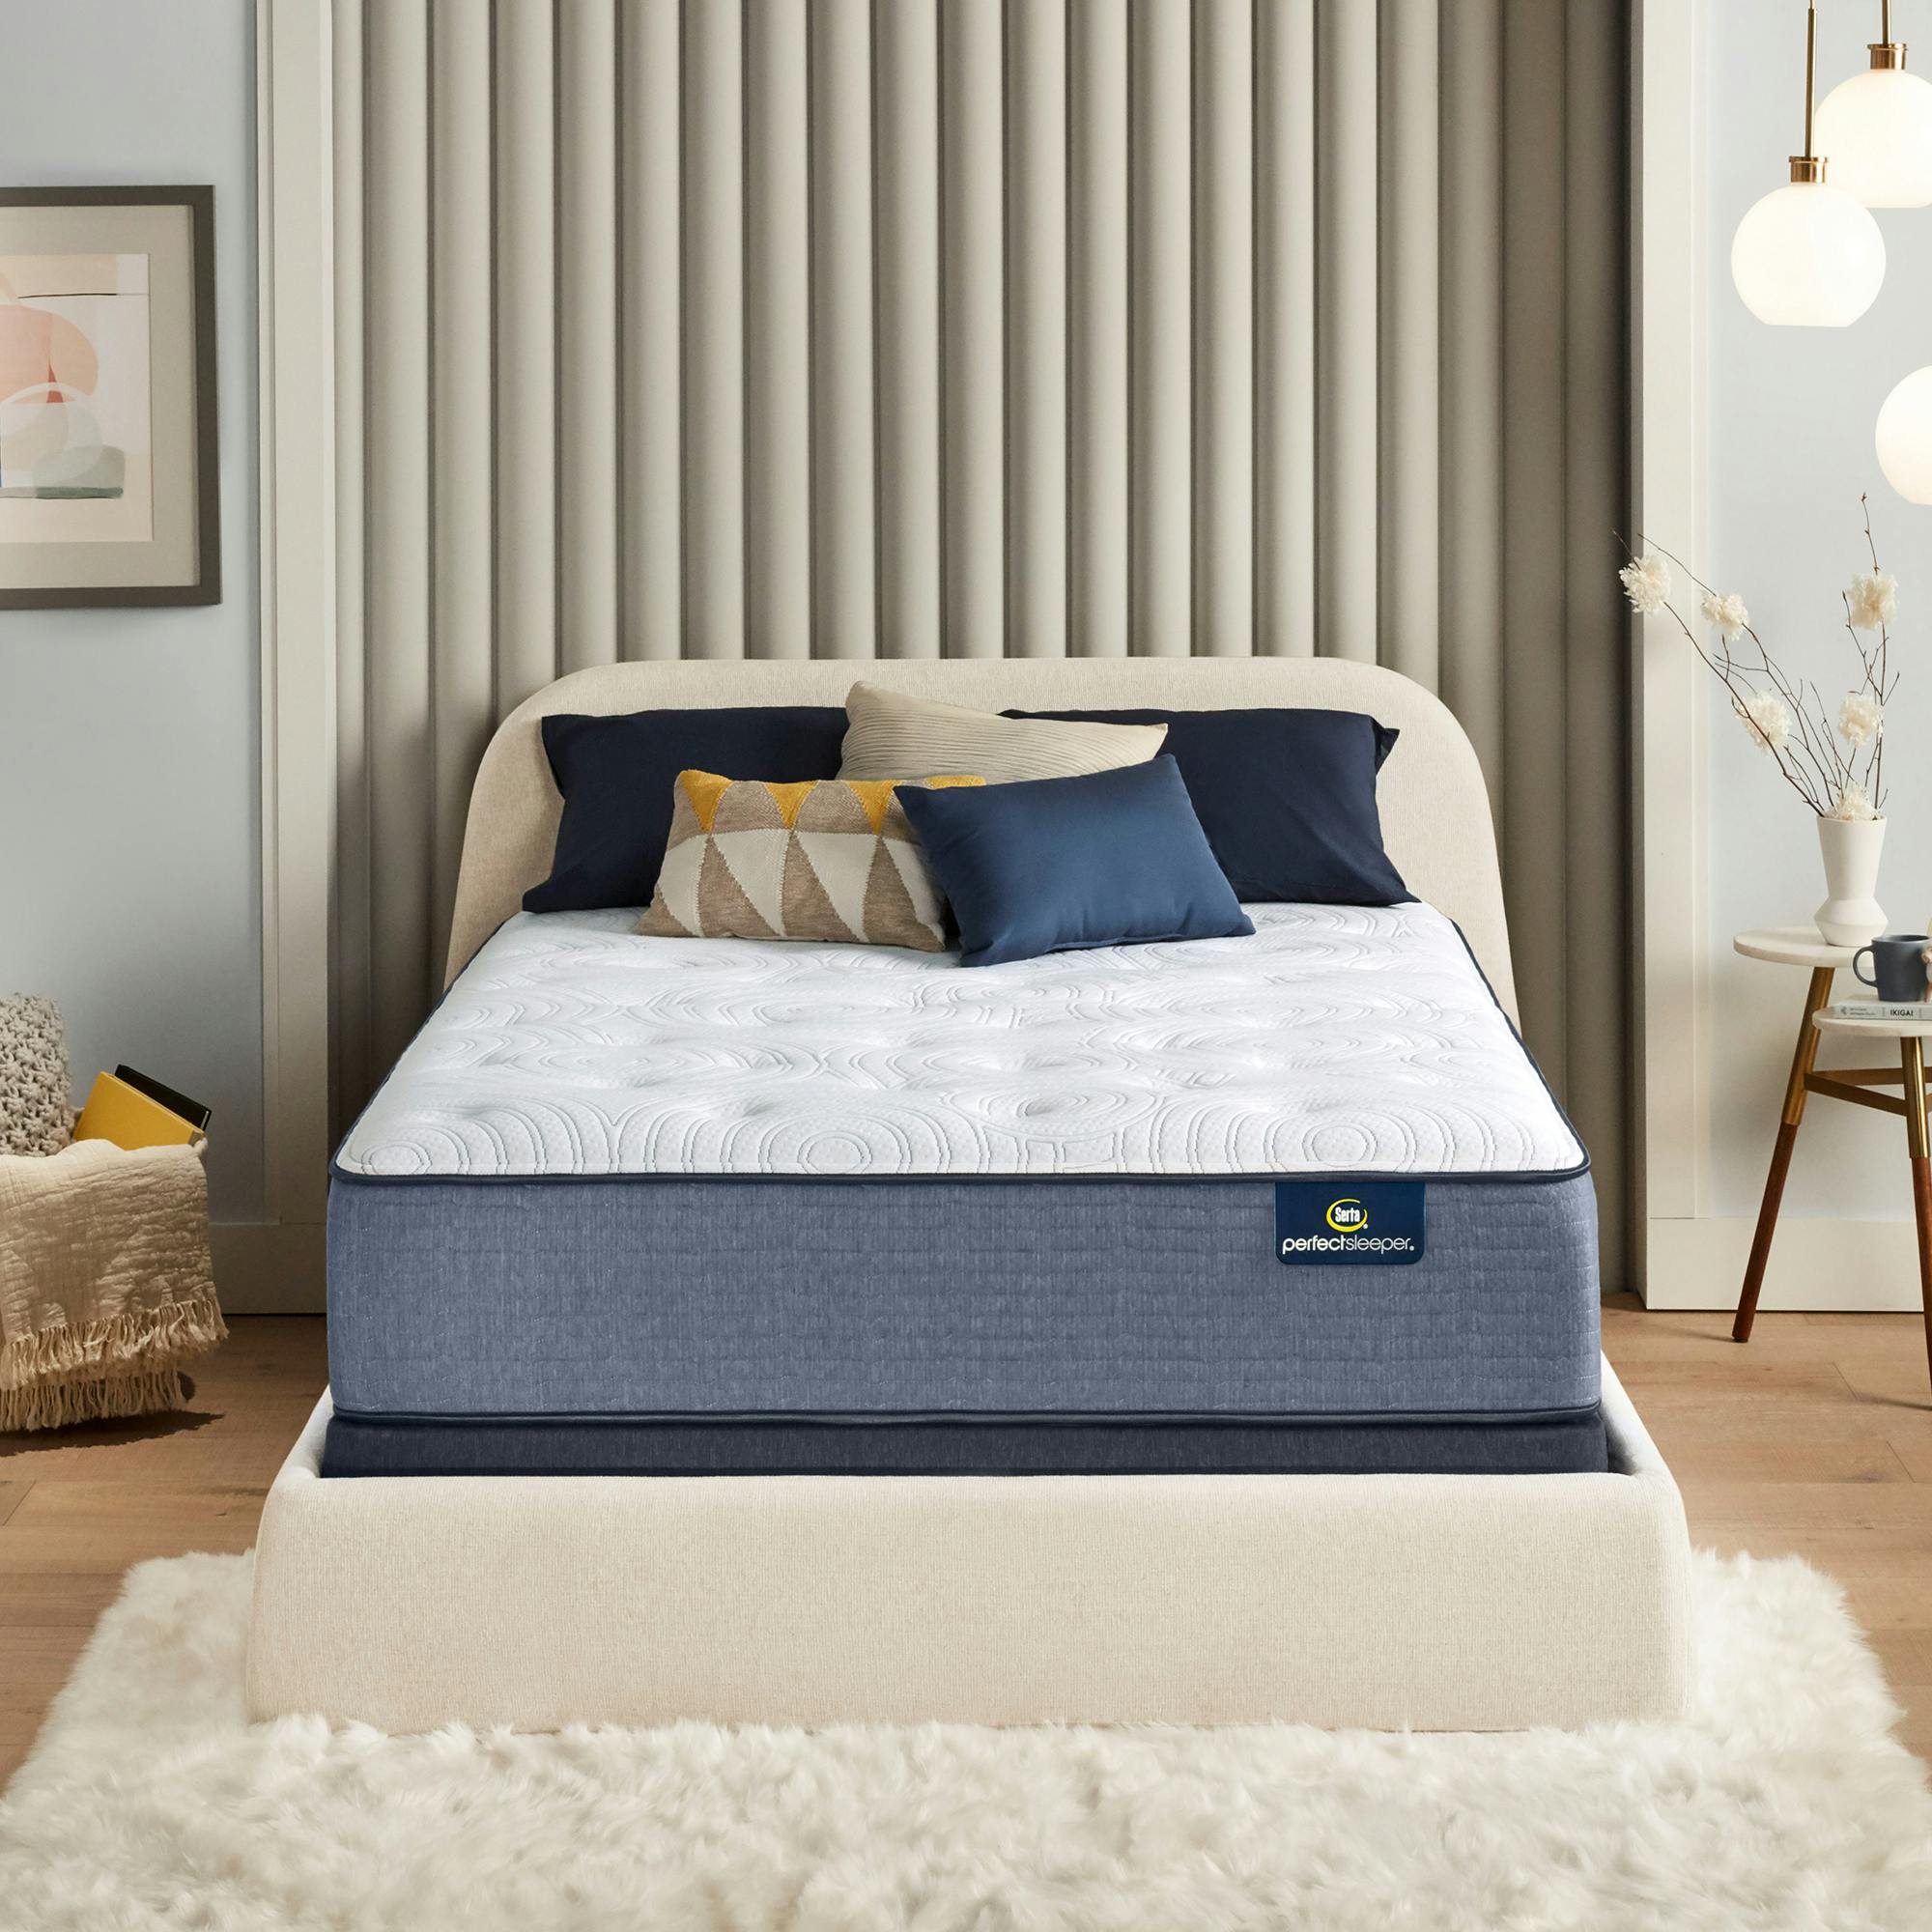 Serta Perfect Sleeper Supportive Mattress, Serta Pillow Top King Size Bed